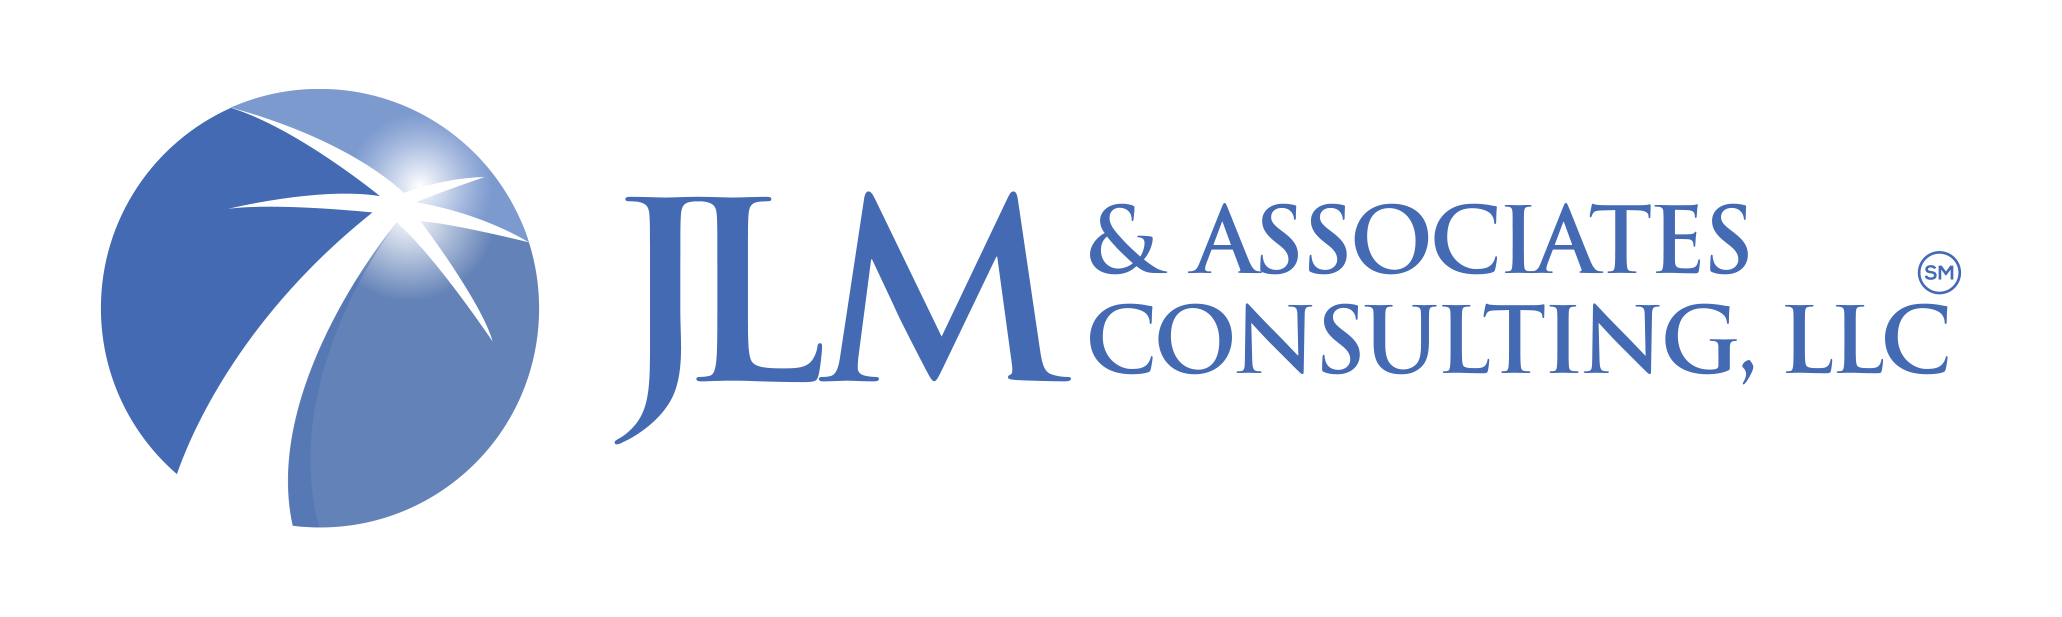 JLM & Associates Consulting, LLC